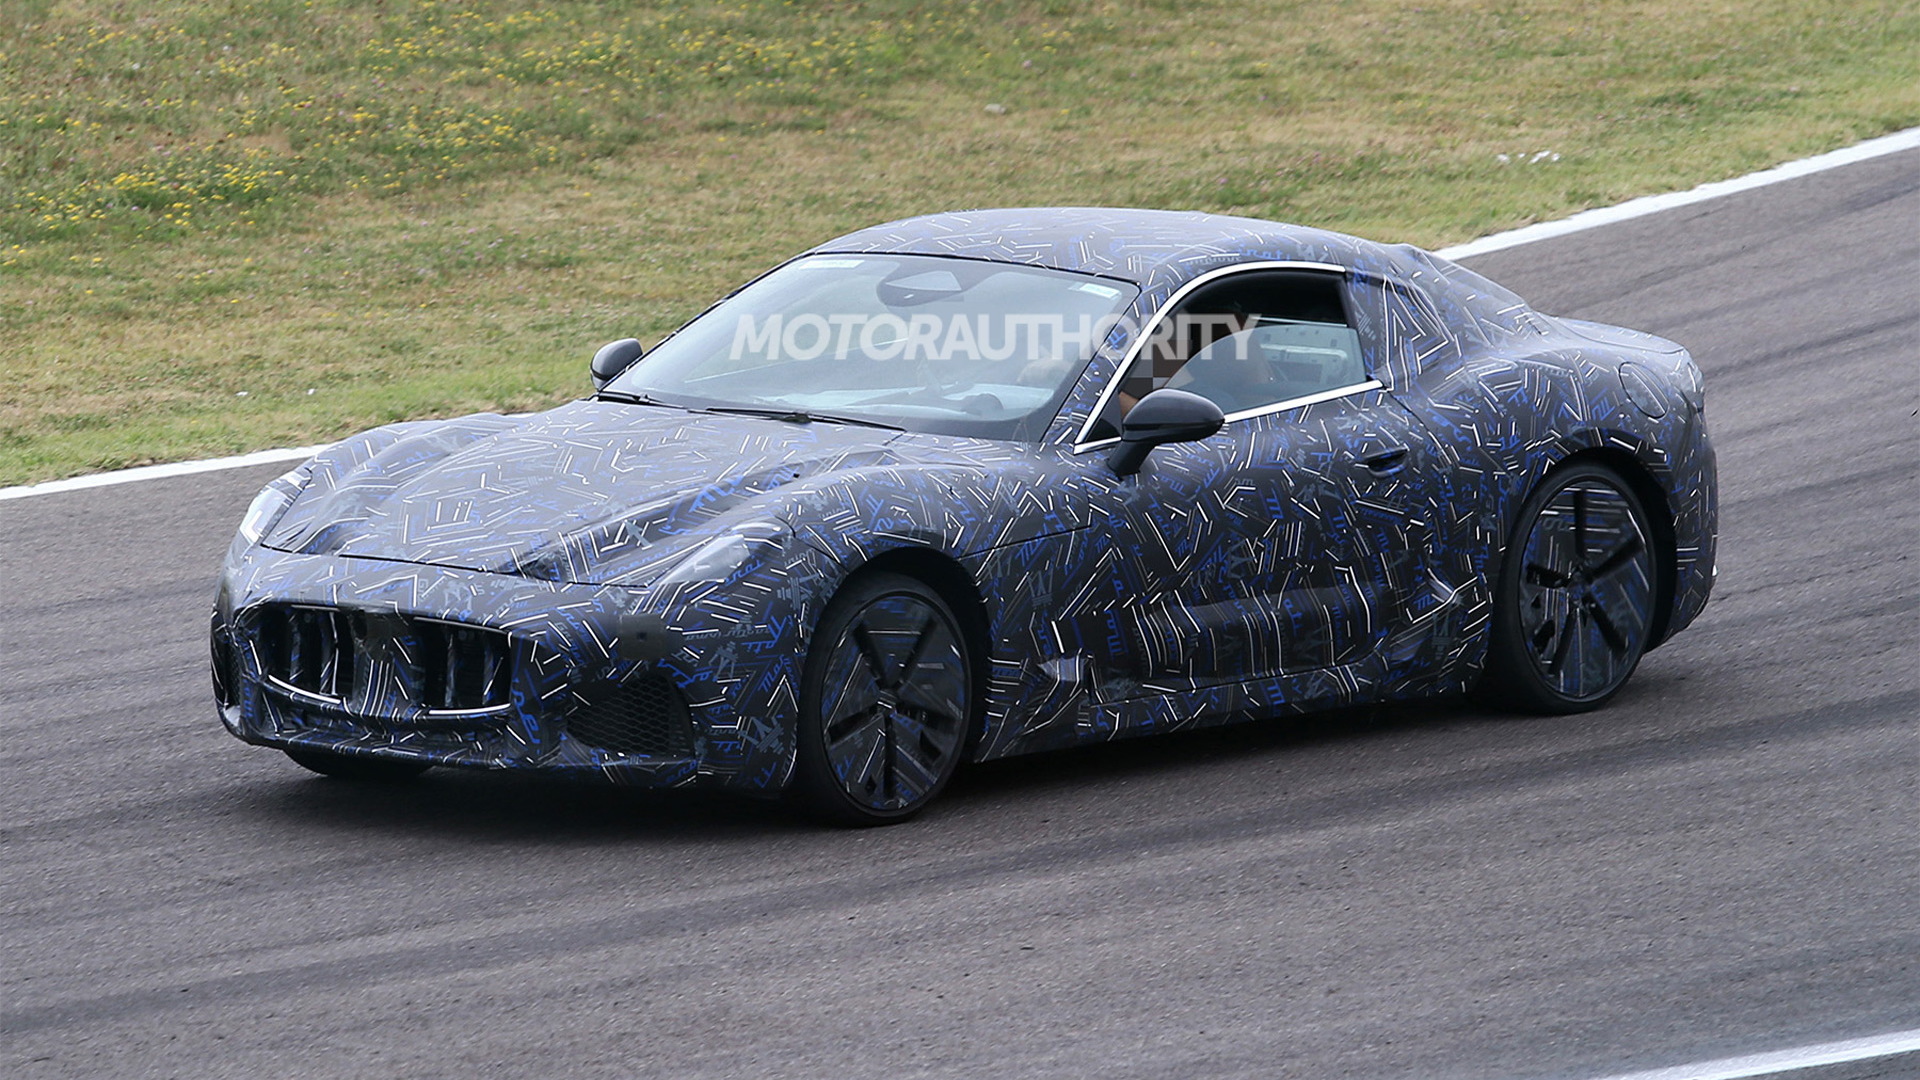 2023 Maserati GranTurismo spy shots - Photo credit: S. Baldauf/SB-Medien